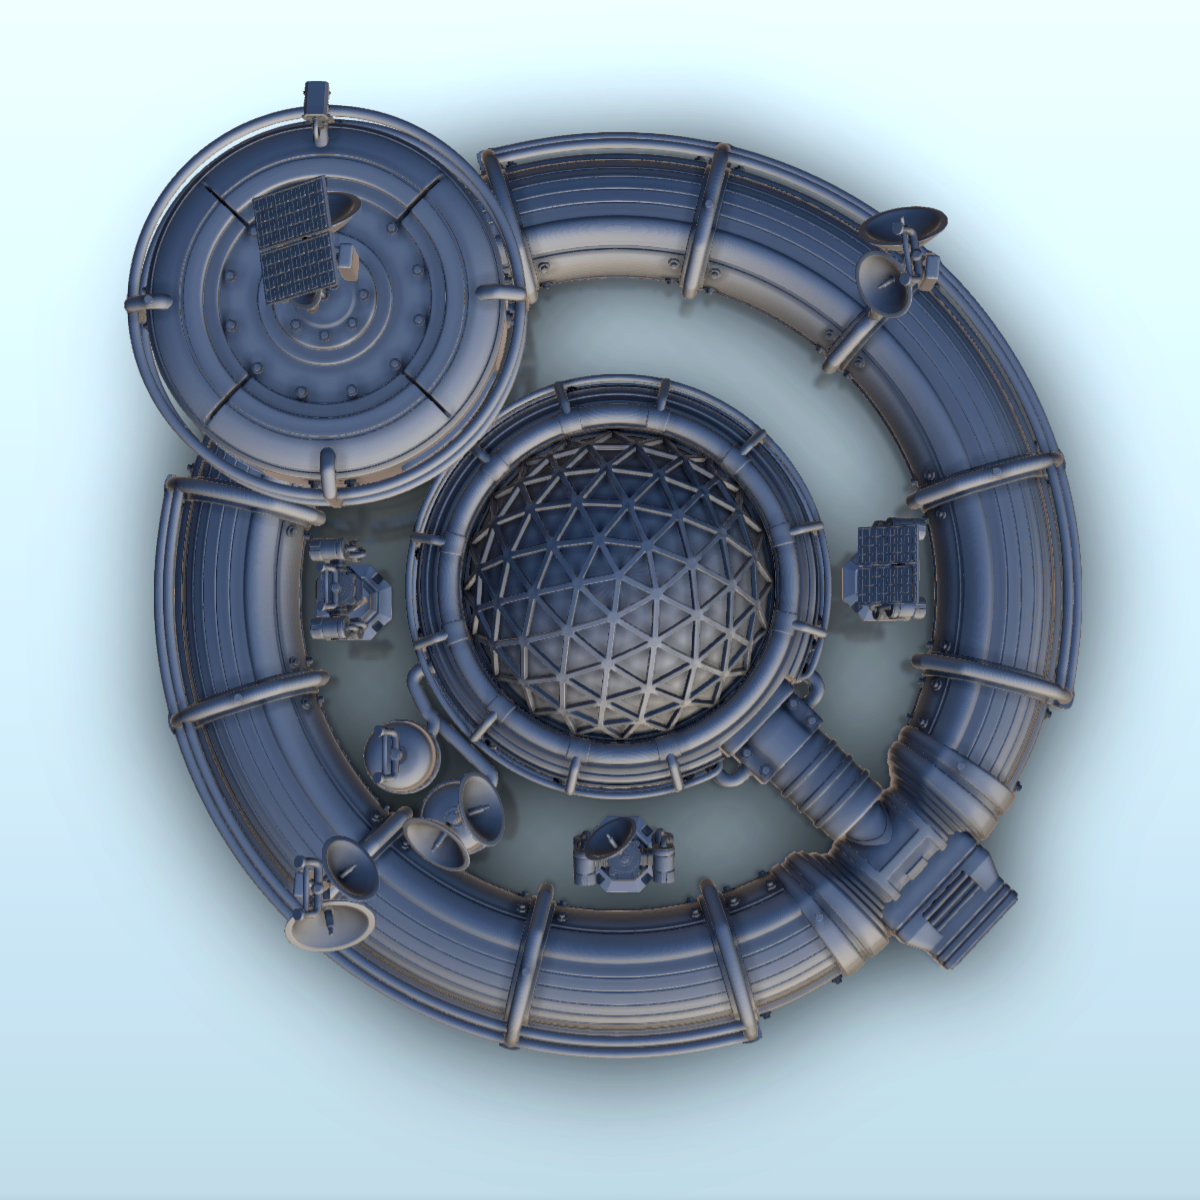 Circular base with tanks - Terrain Scifi Science fiction SF